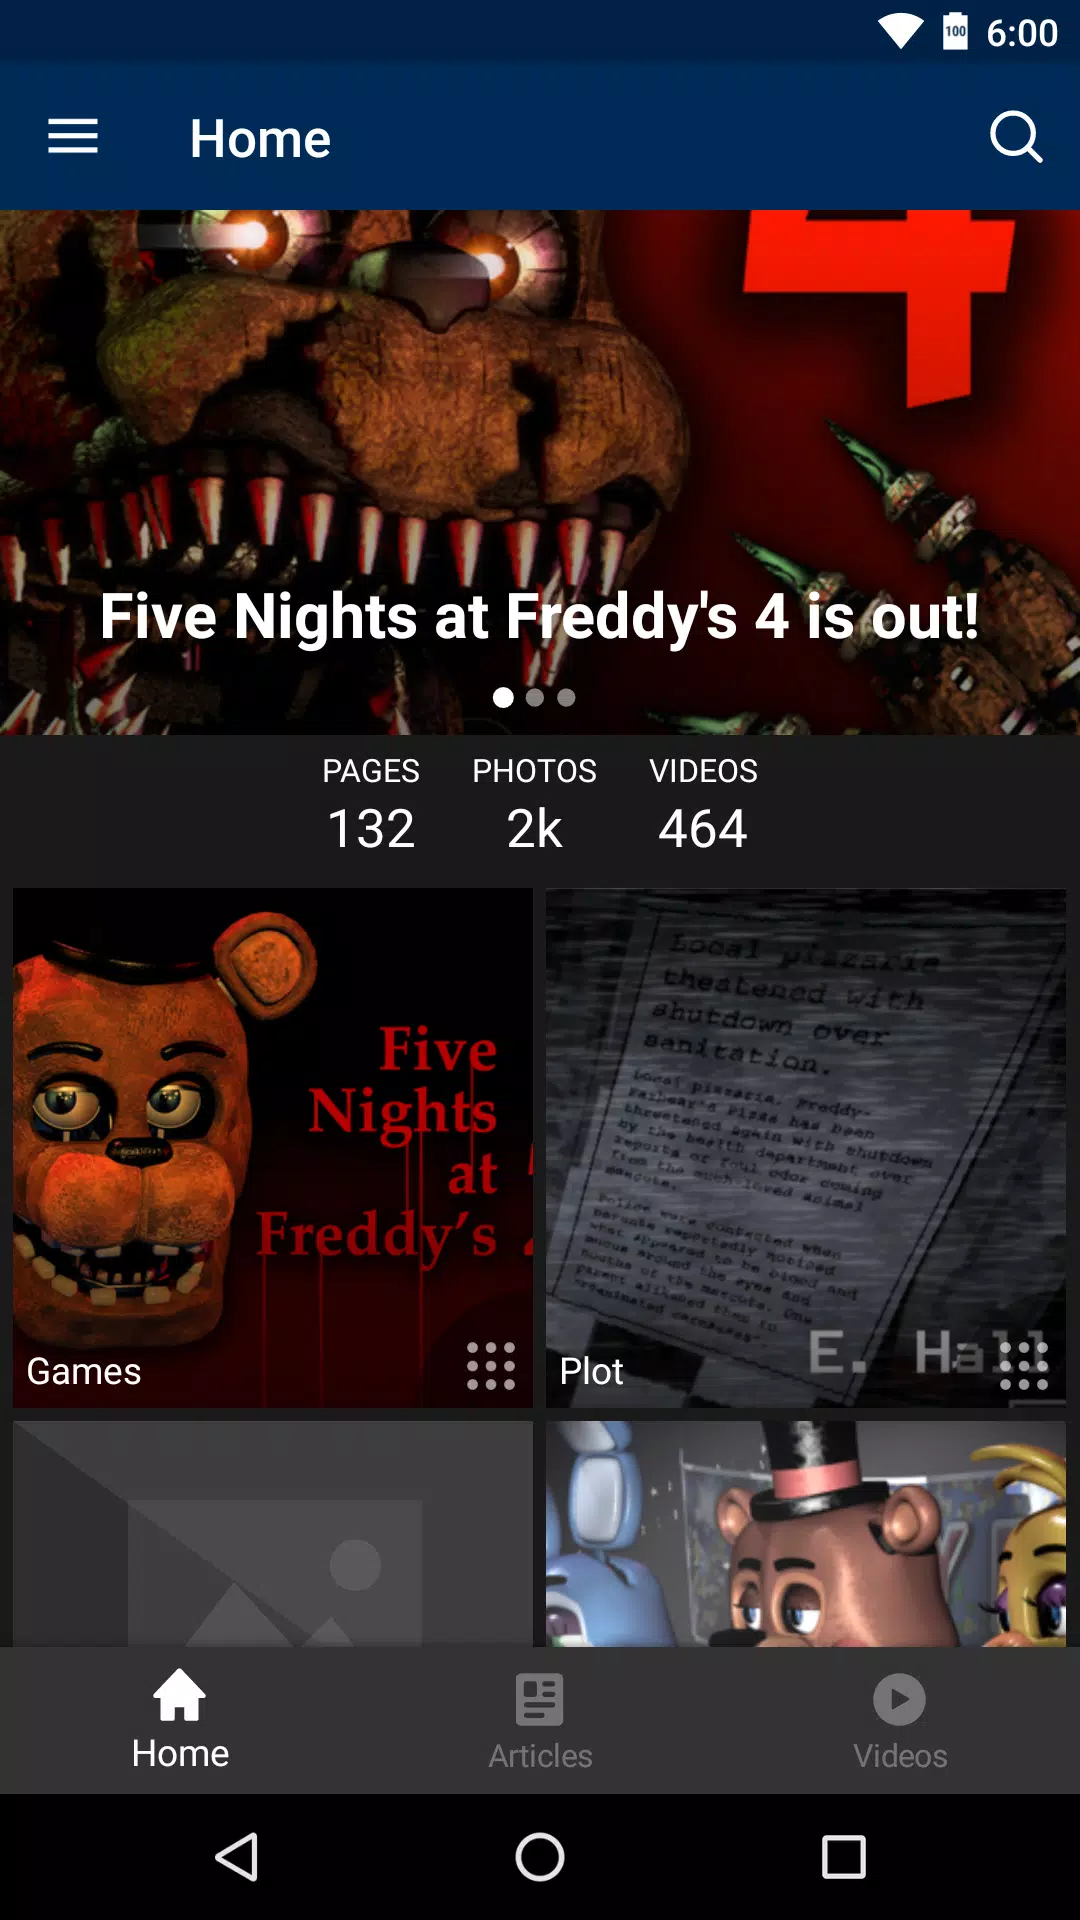 MOD, Five Nights at Freddy's Wiki